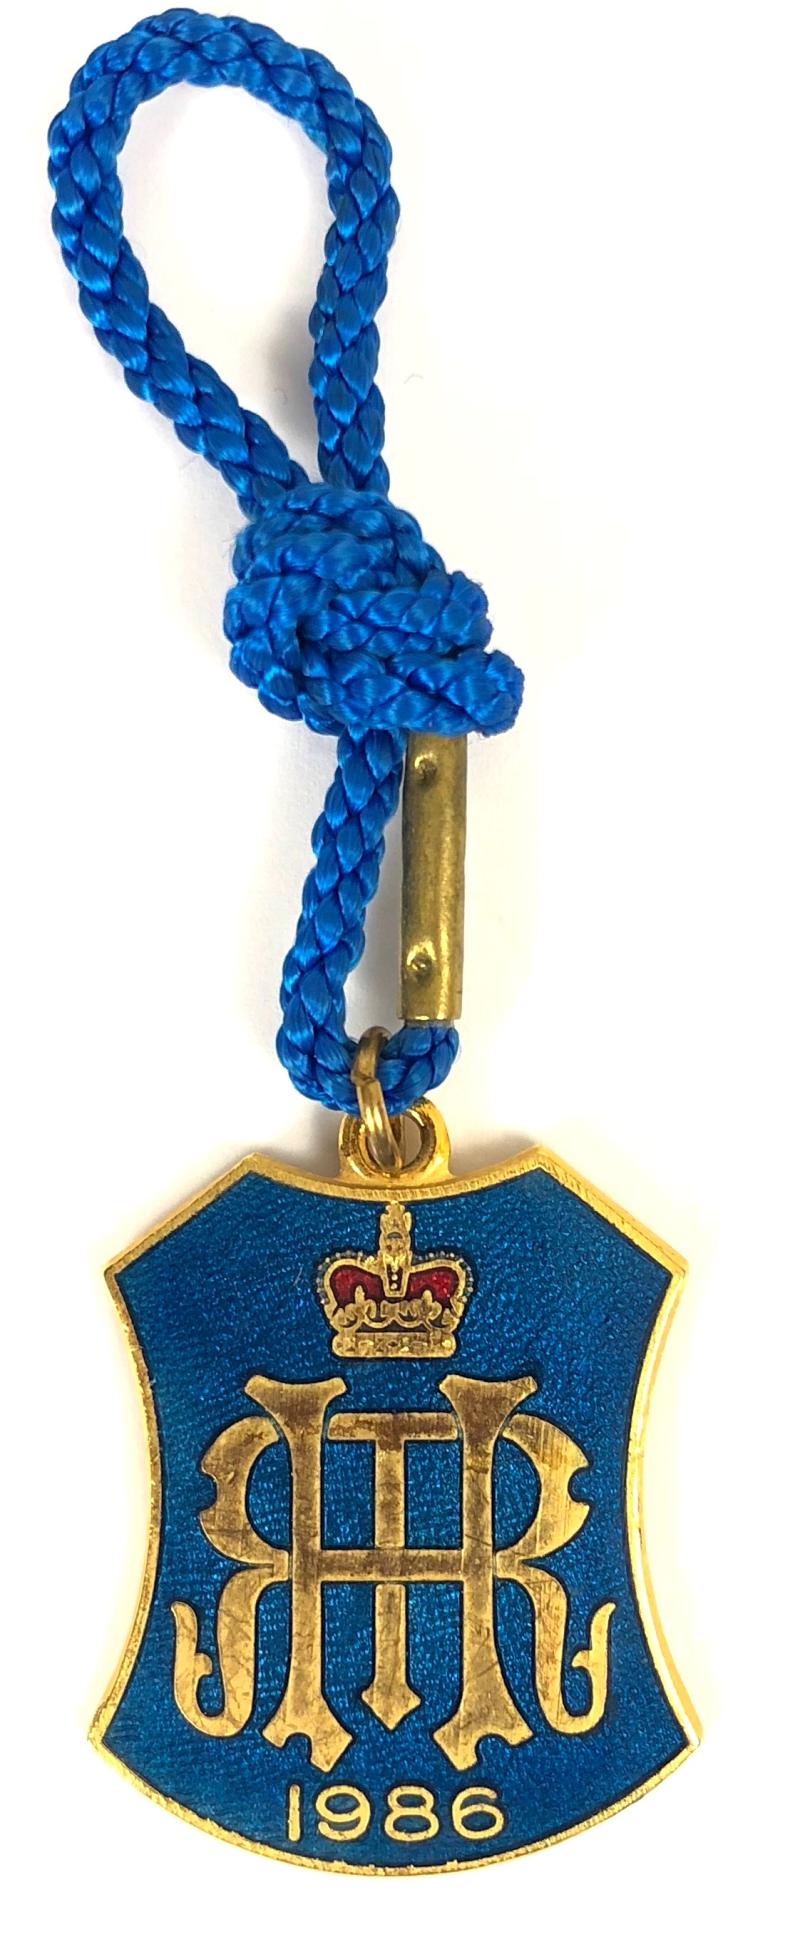 1986 Henley Royal Regatta stewards enclosure badge